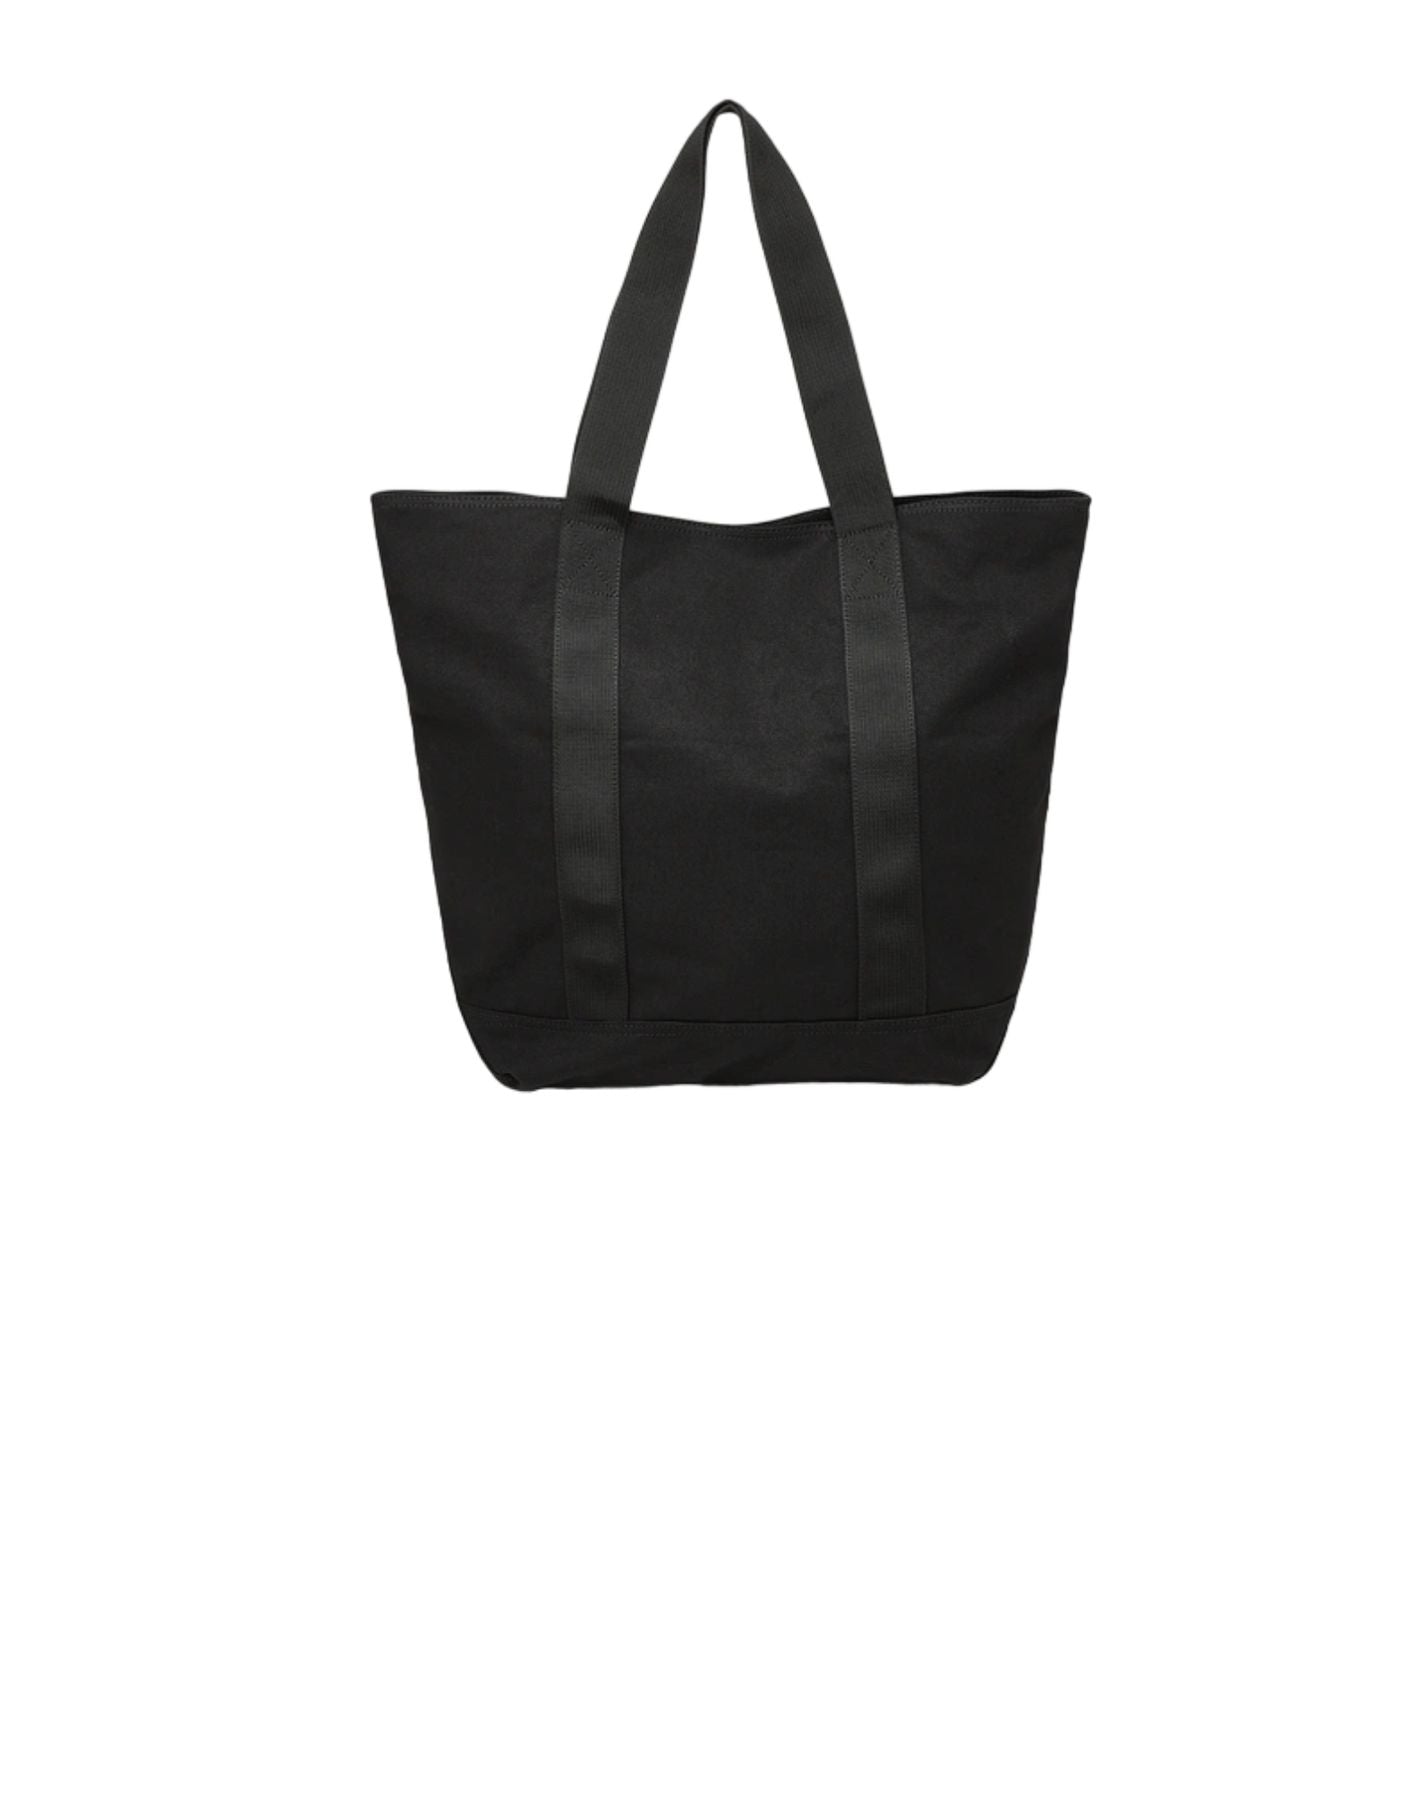 Bag Woman I033102 Black Carhartt Wip